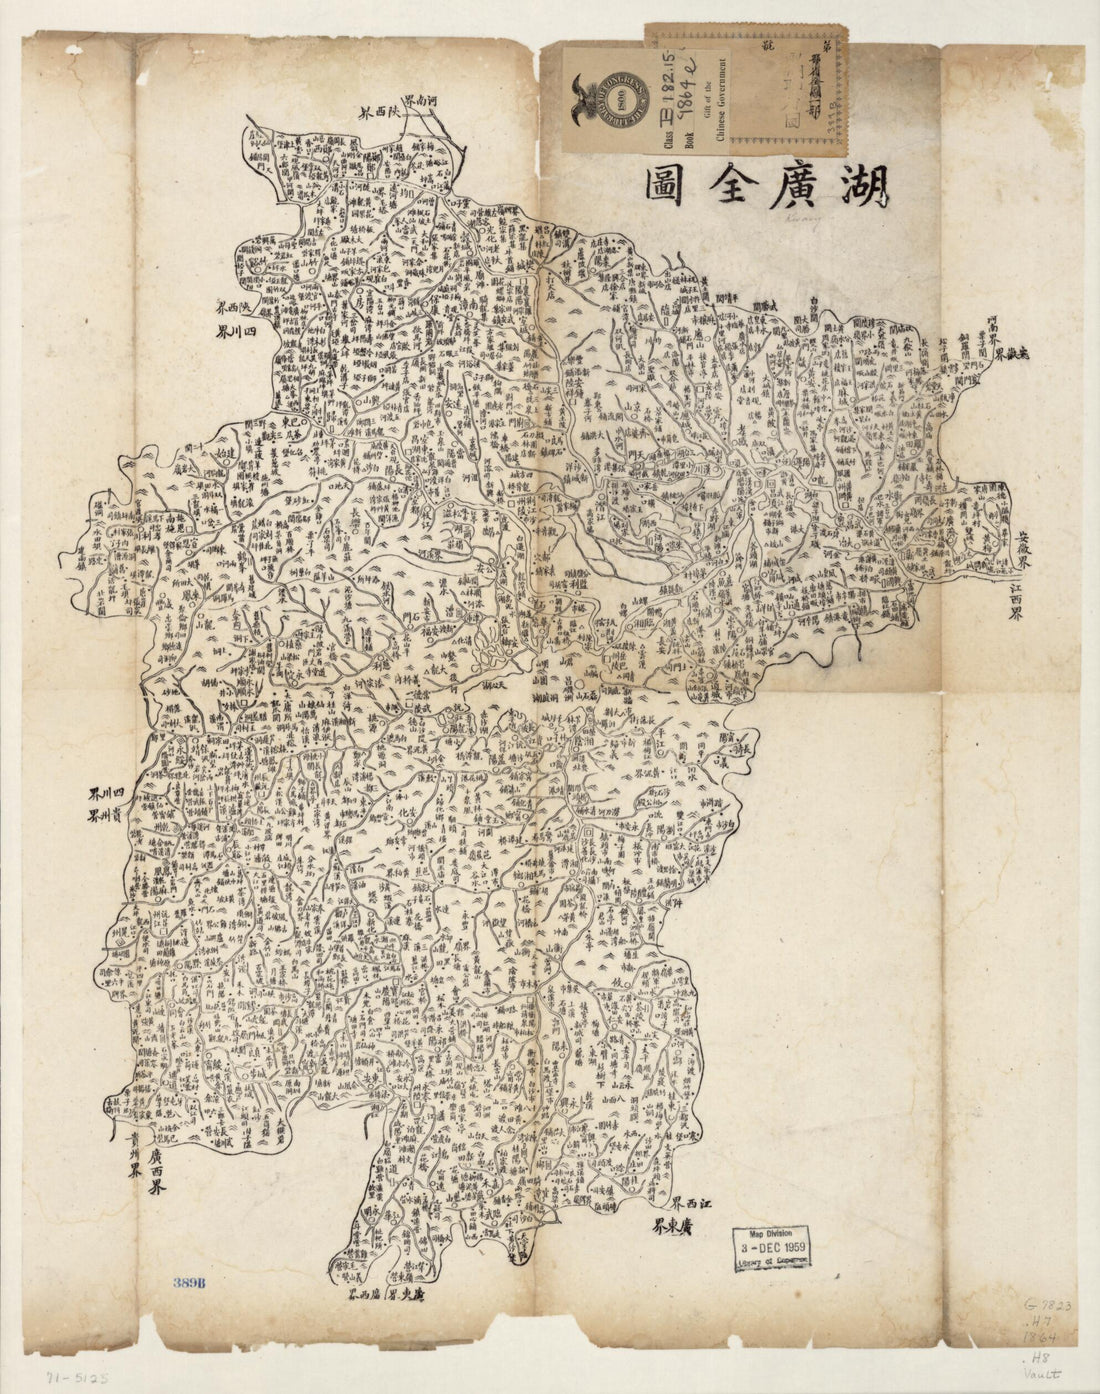 This old map of Huguang Quan Tu from 1864 was created by  Hubei Guan Shu Ju in 1864